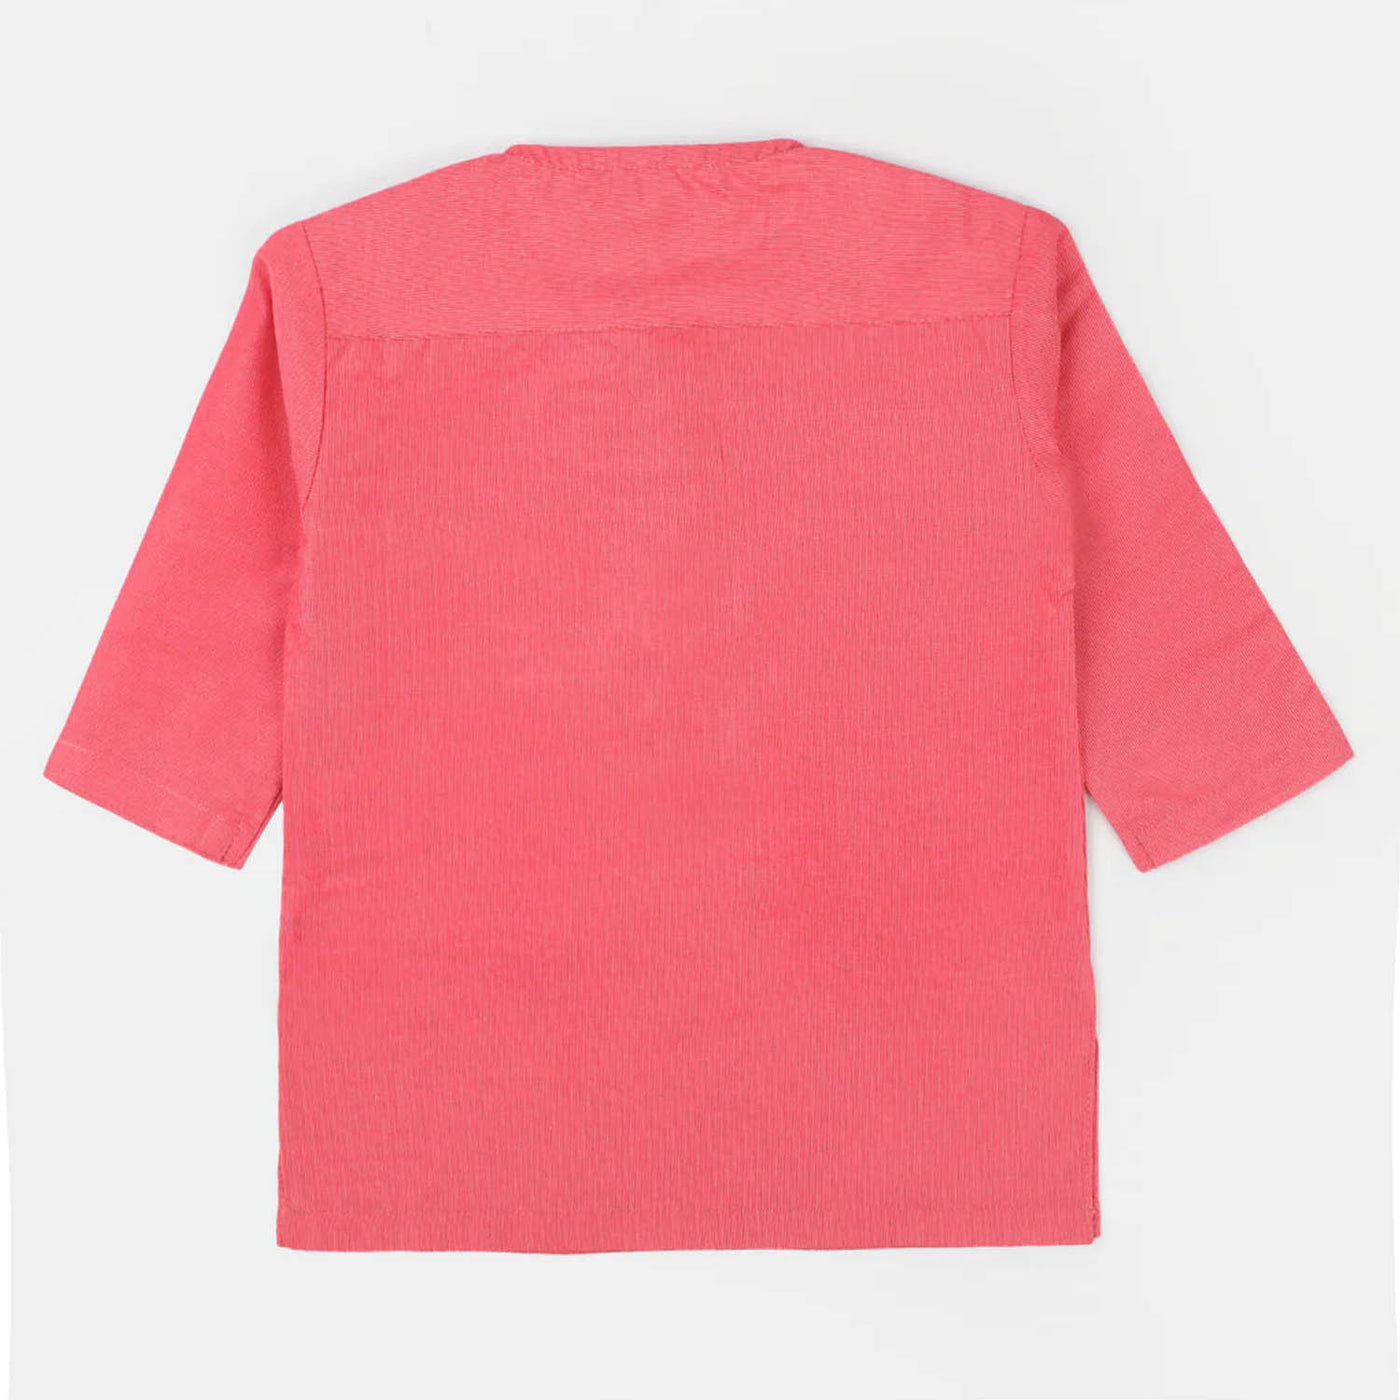 Infant Boys Embroidered Kurta Pajama Suit- Paradise Pink